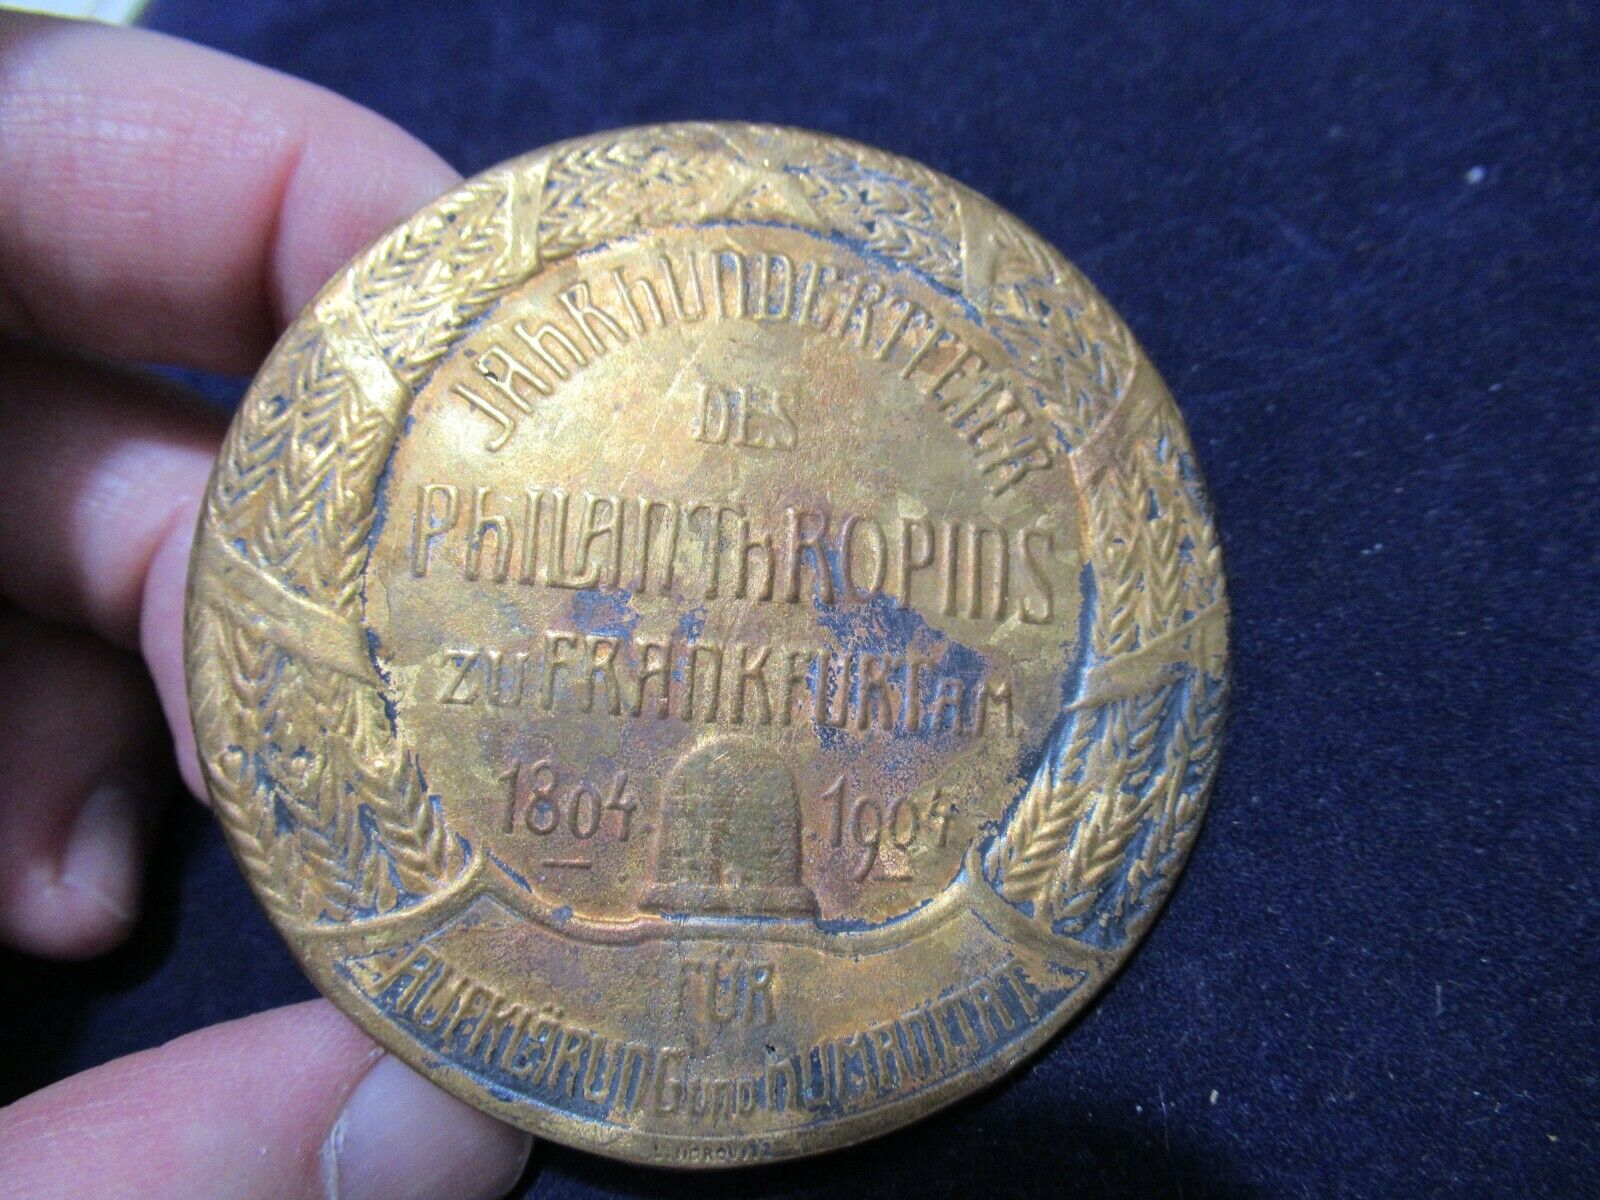 Rare 1904 Antique Large Jewish Medal, Frankfurt, 1804-1904 Philanthropy, Judaica